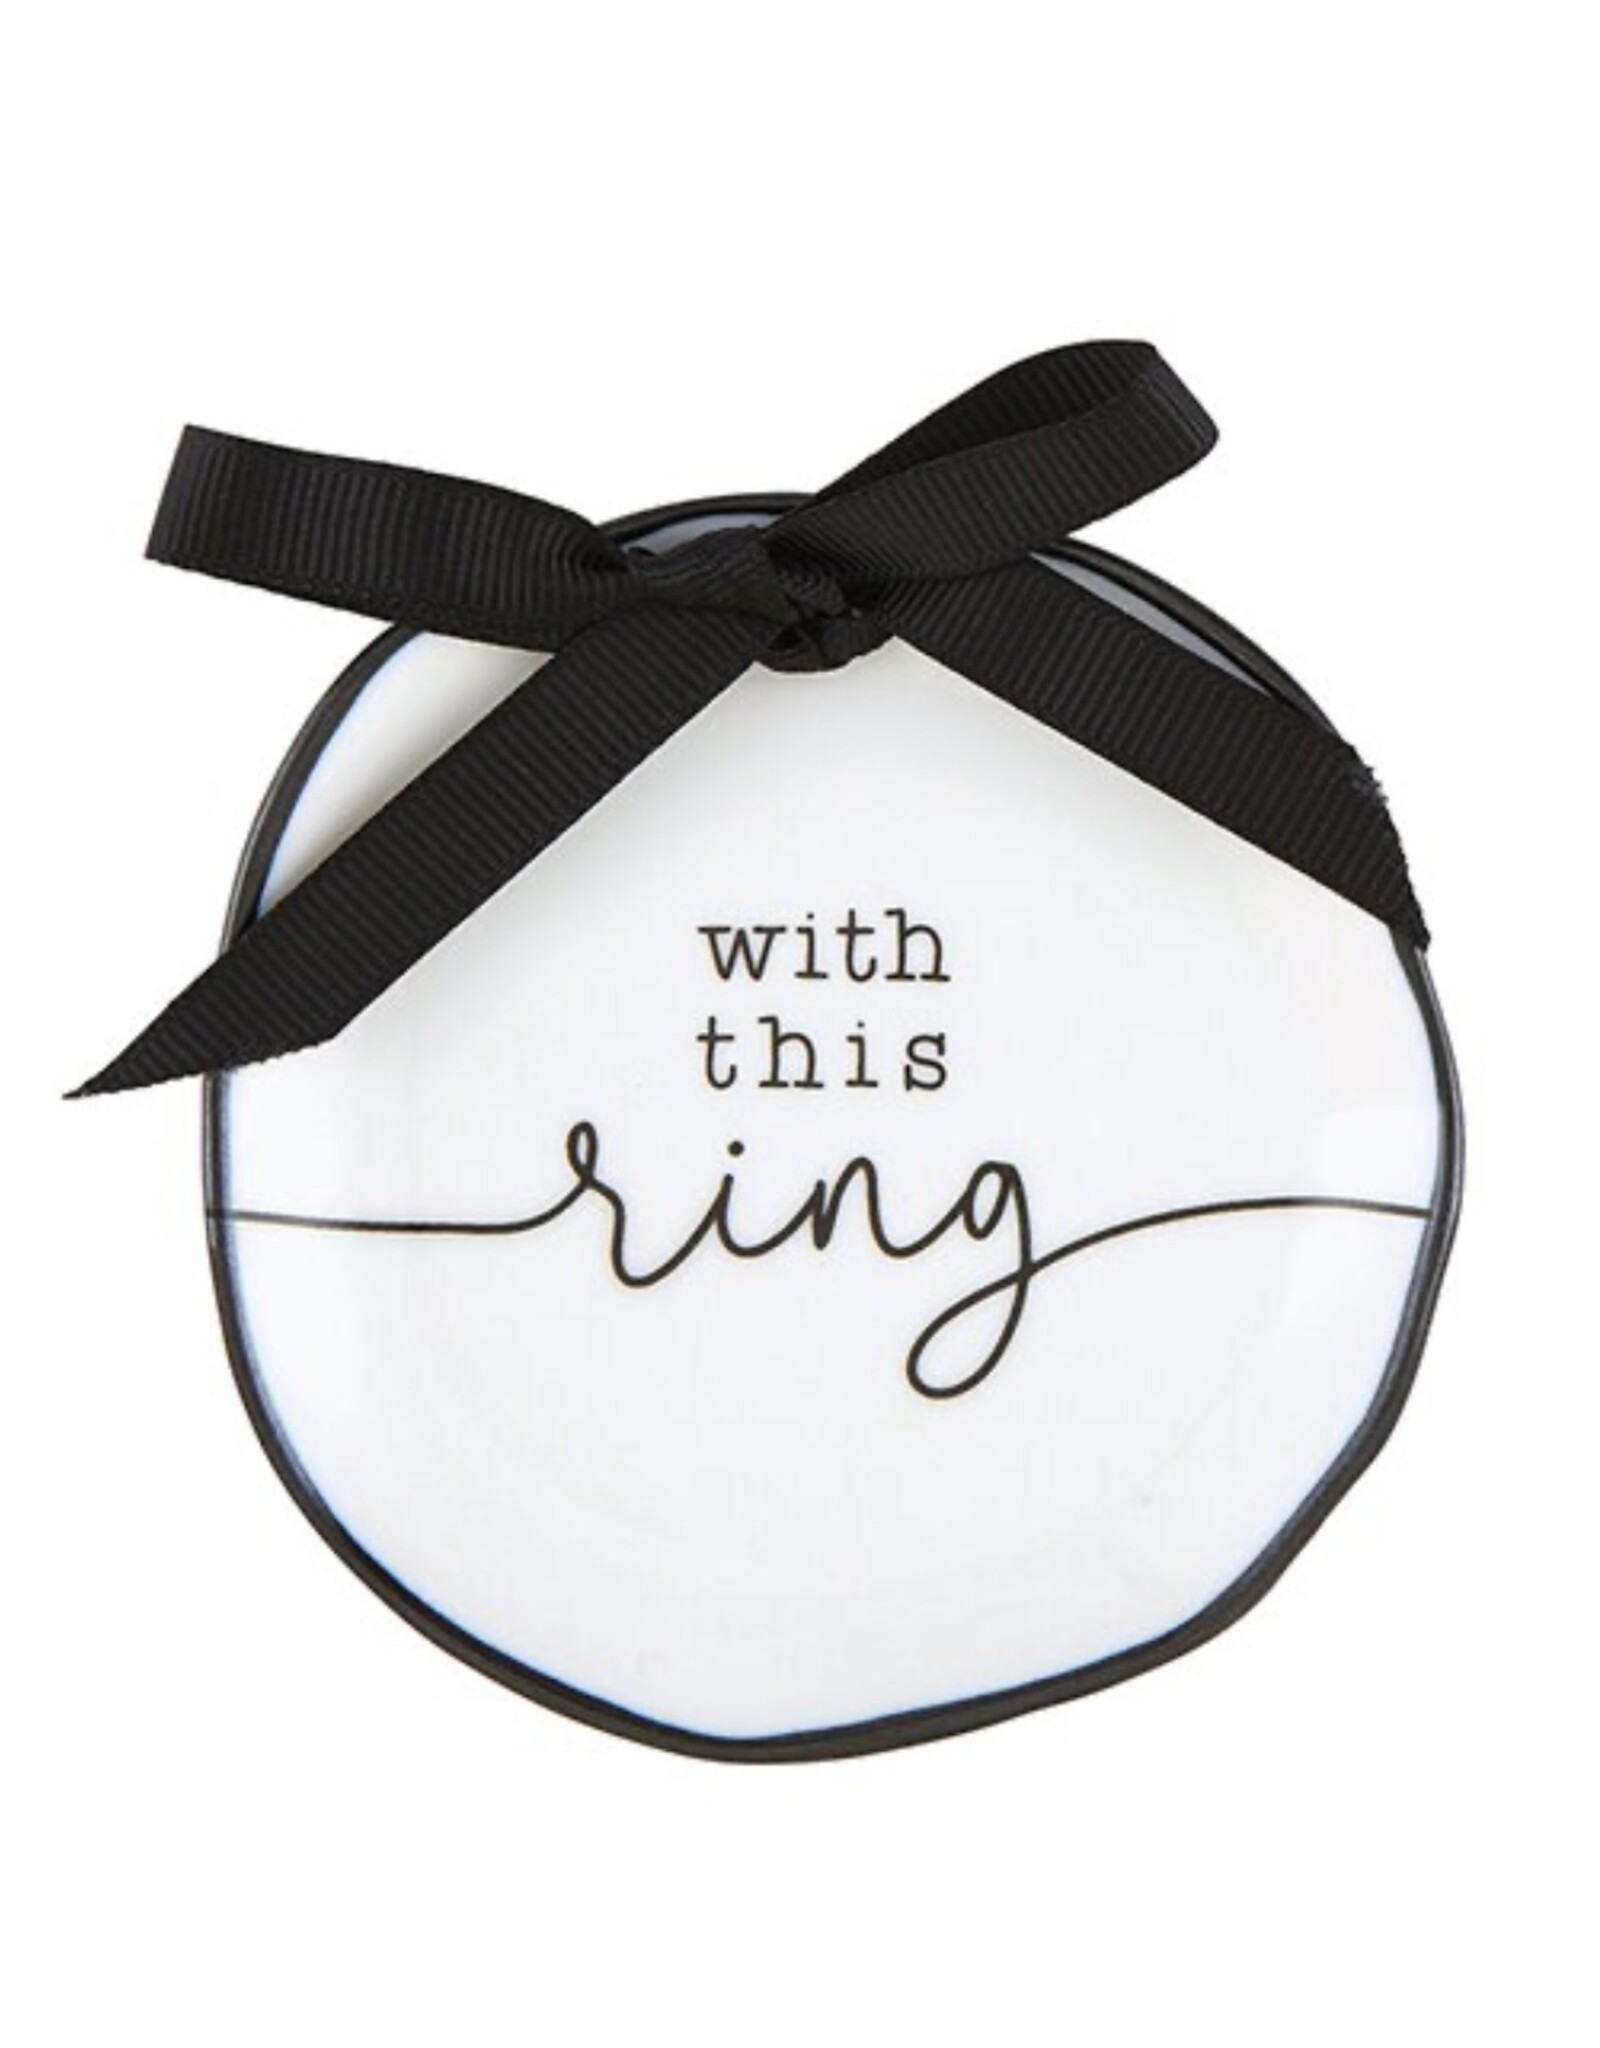 Santa Barbara Design Studio Ring Bearer Dish - With This Ring